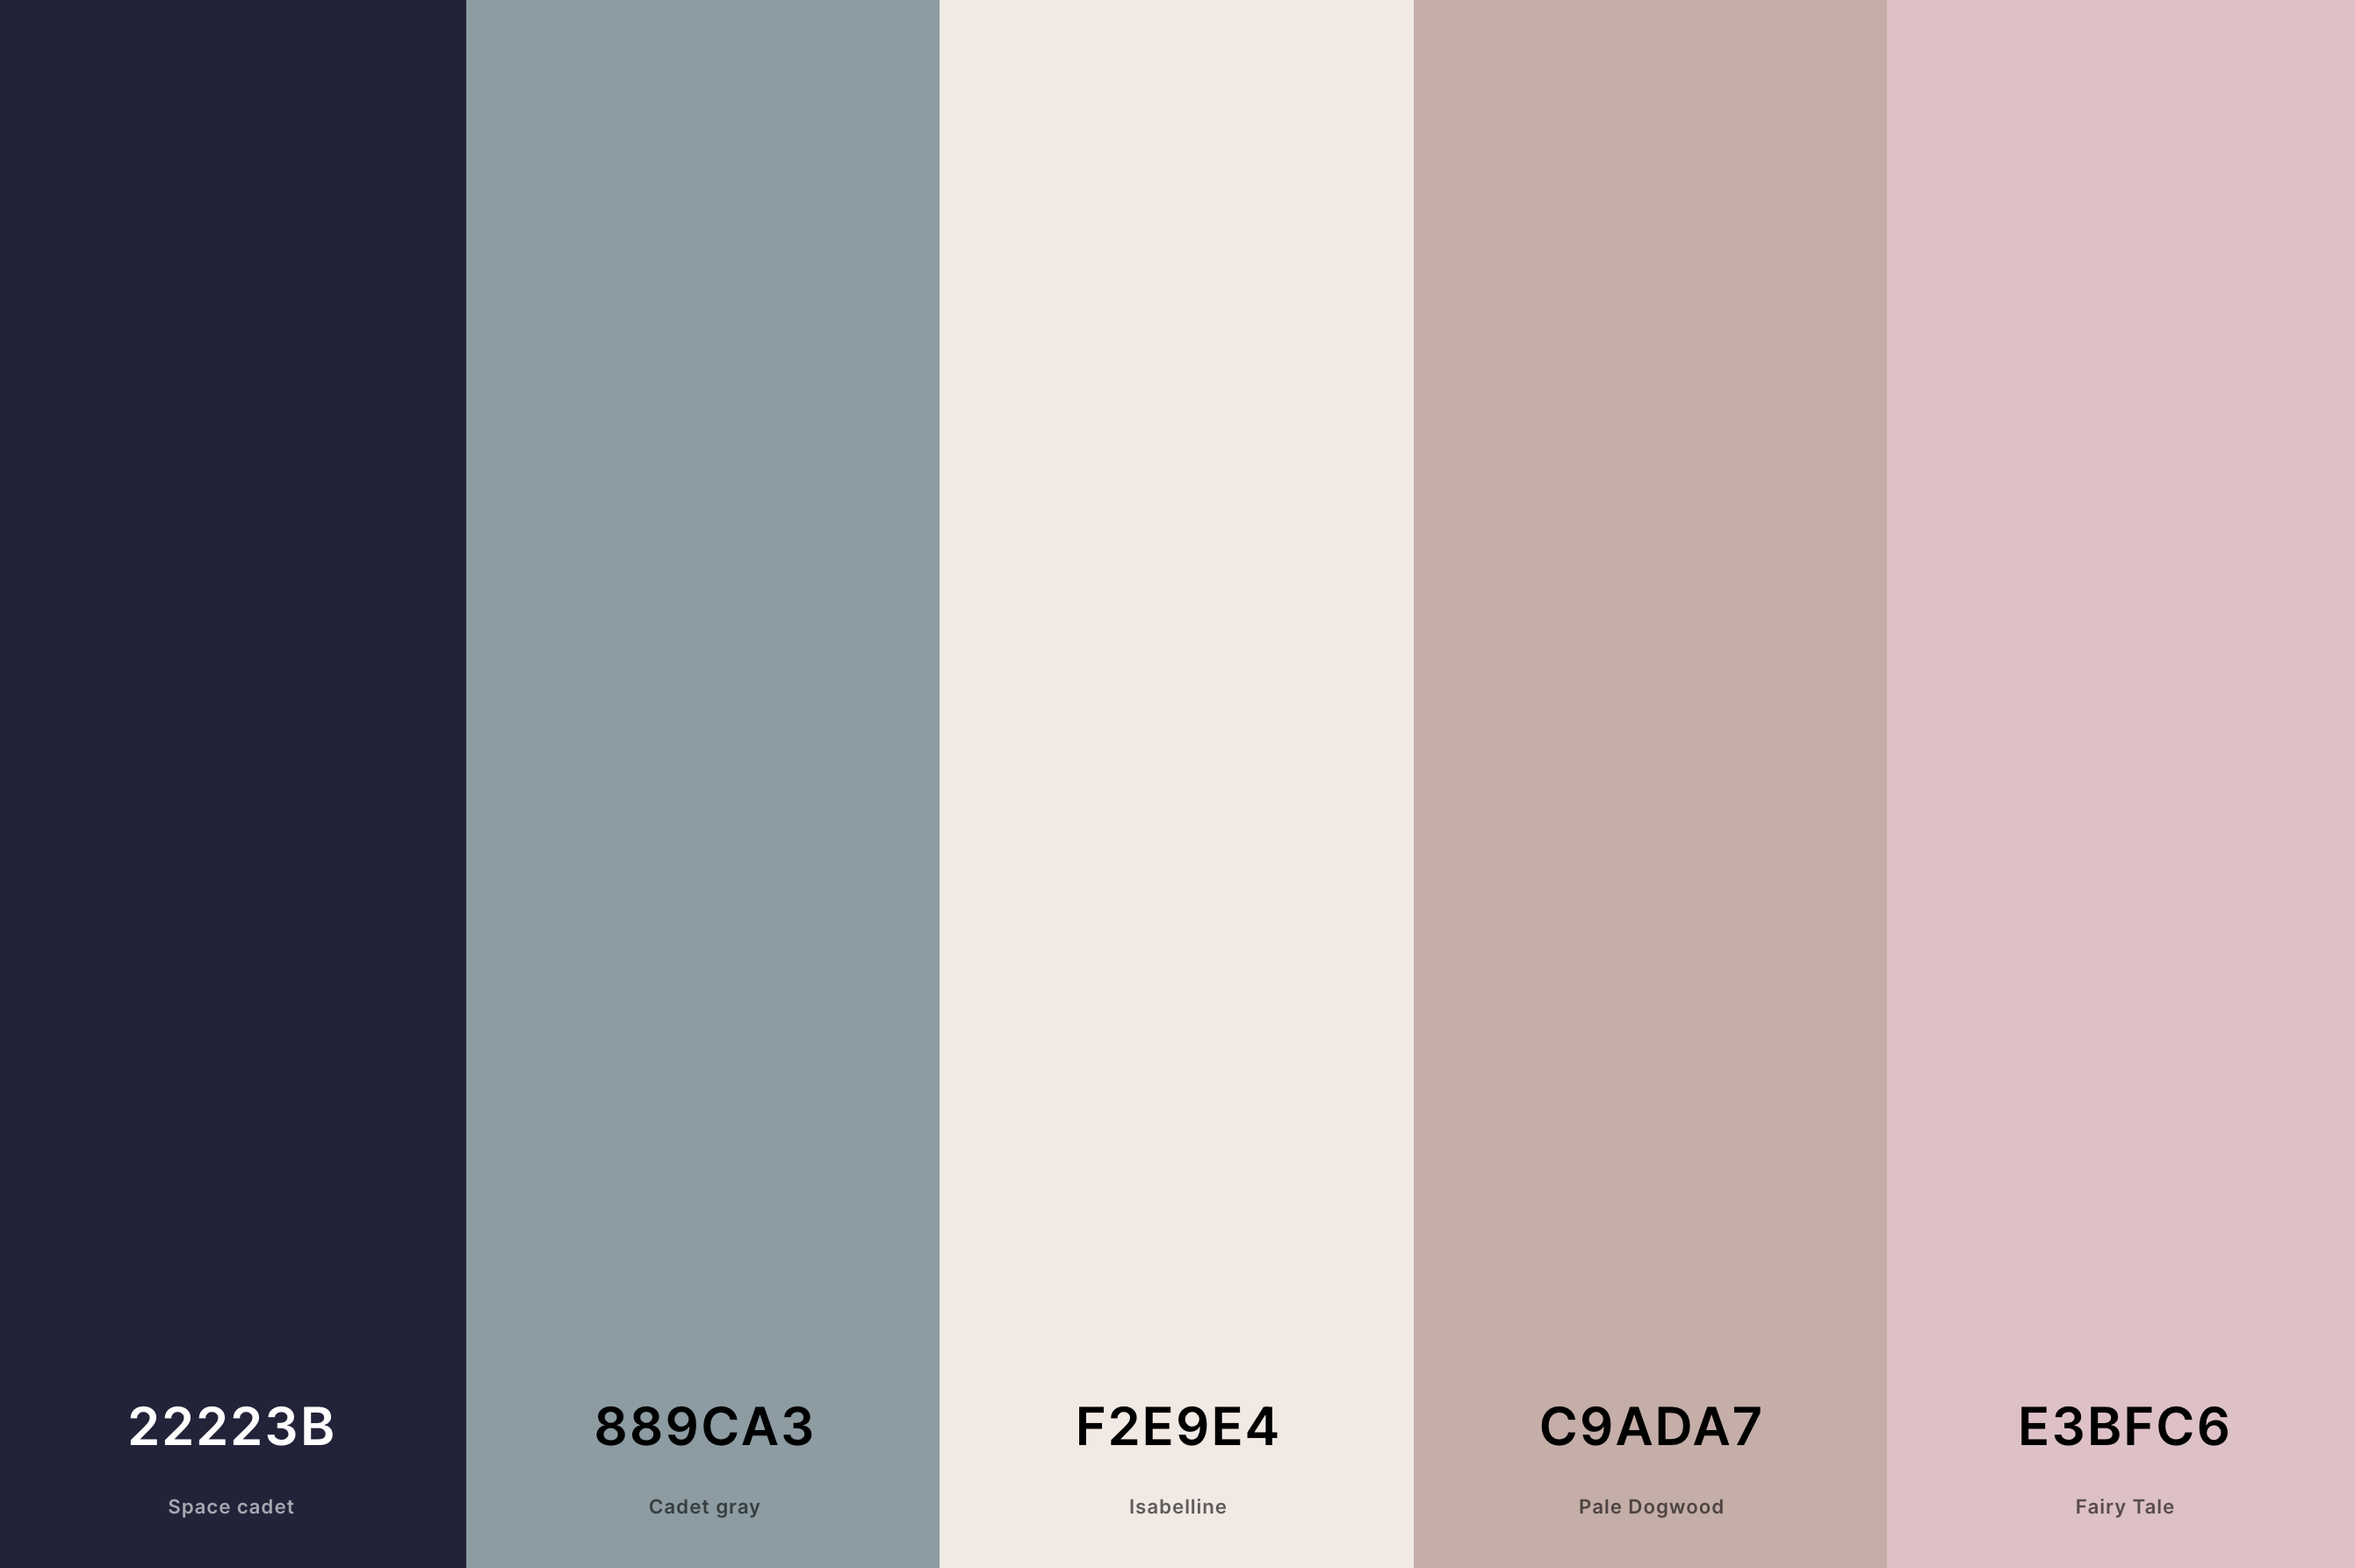 10. Neutral Wedding Color Palette Color Palette with Space Cadet (Hex #22223B) + Cadet Gray (Hex #889CA3) + Isabelline (Hex #F2E9E4) + Pale Dogwood (Hex #C9ADA7) + Fairy Tale (Hex #E3BFC6) Color Palette with Hex Codes